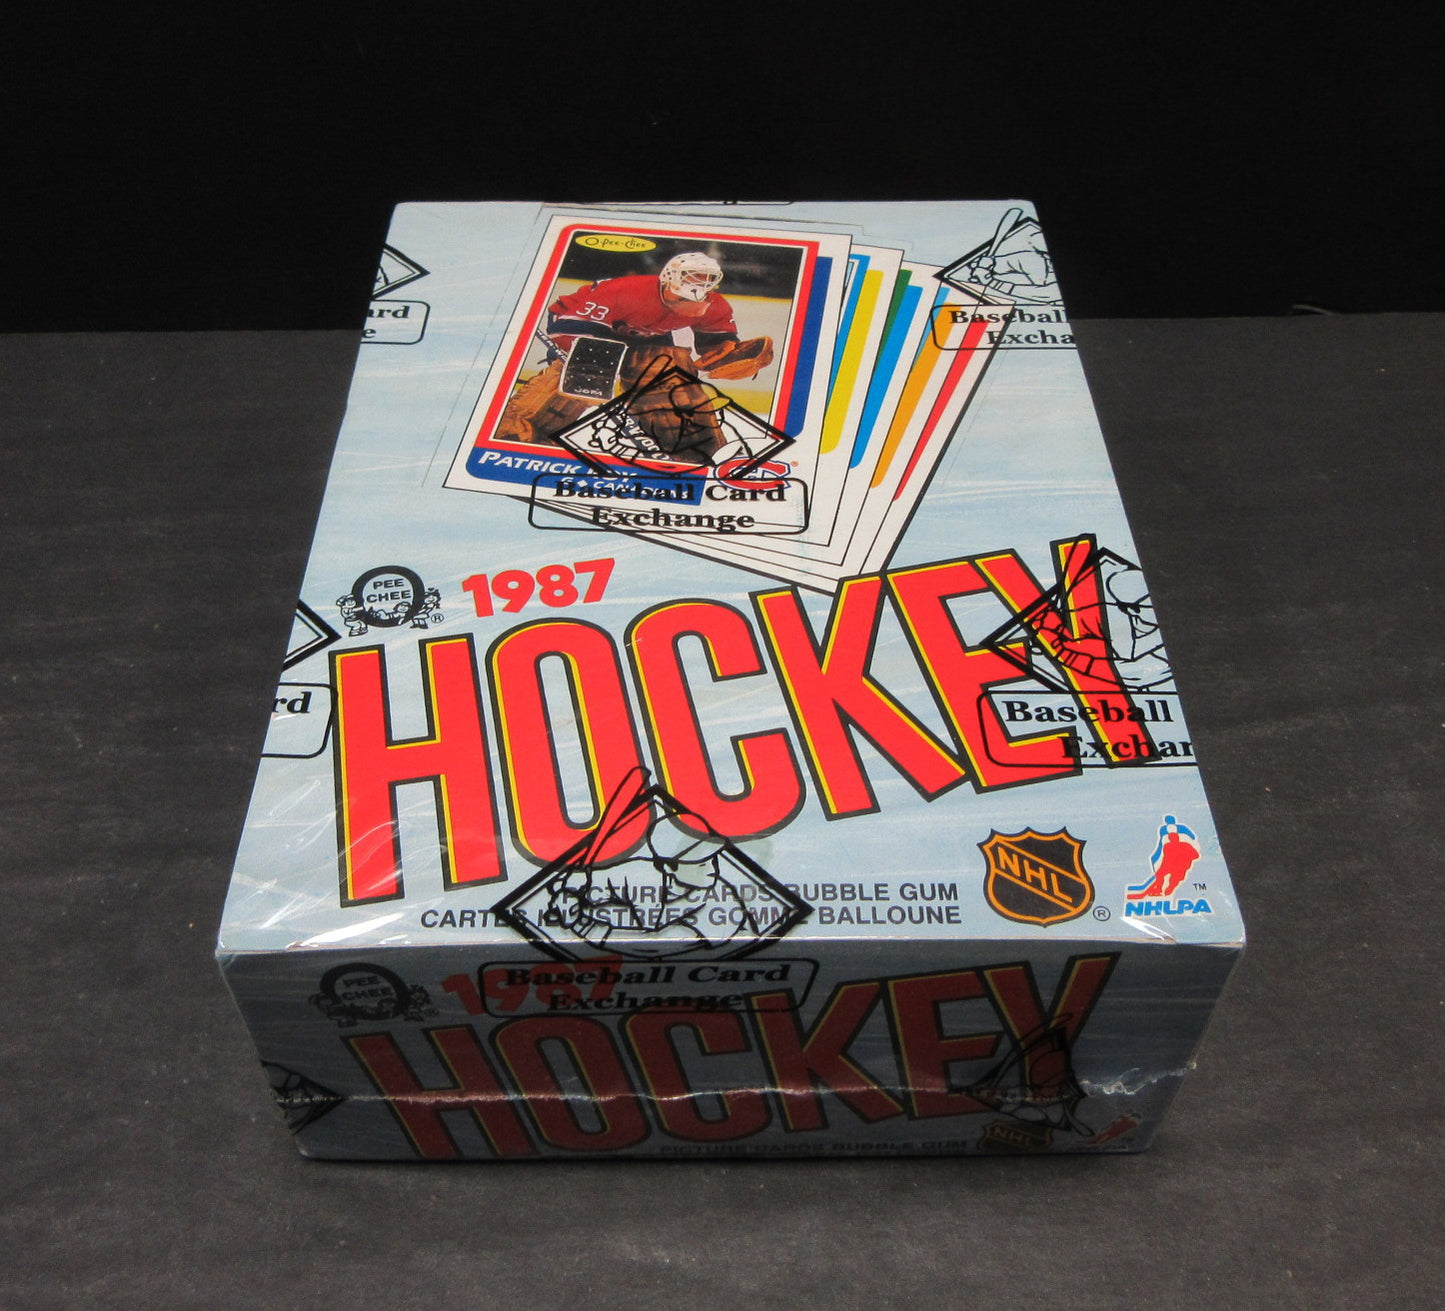 1986/87 OPC O-Pee-Chee Hockey Unopened Wax Box (Tape) (BBCE)